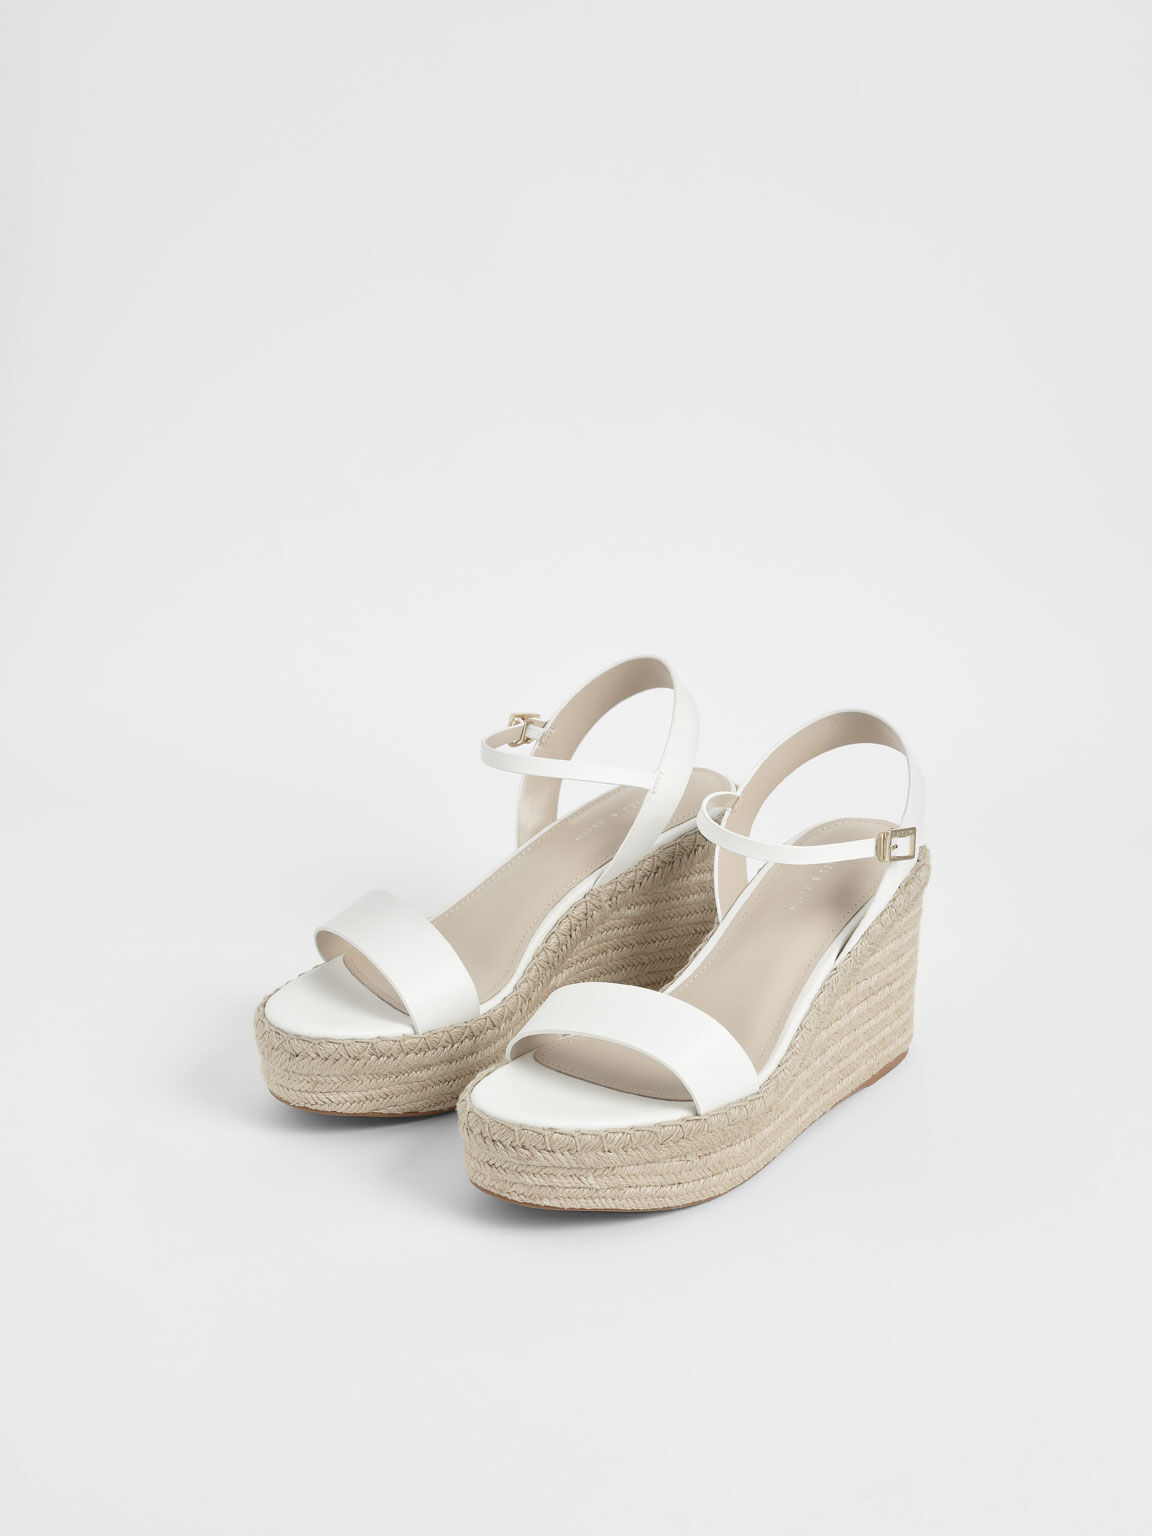 Sandal Ankle Strap Espadrille Wedges, White, hi-res